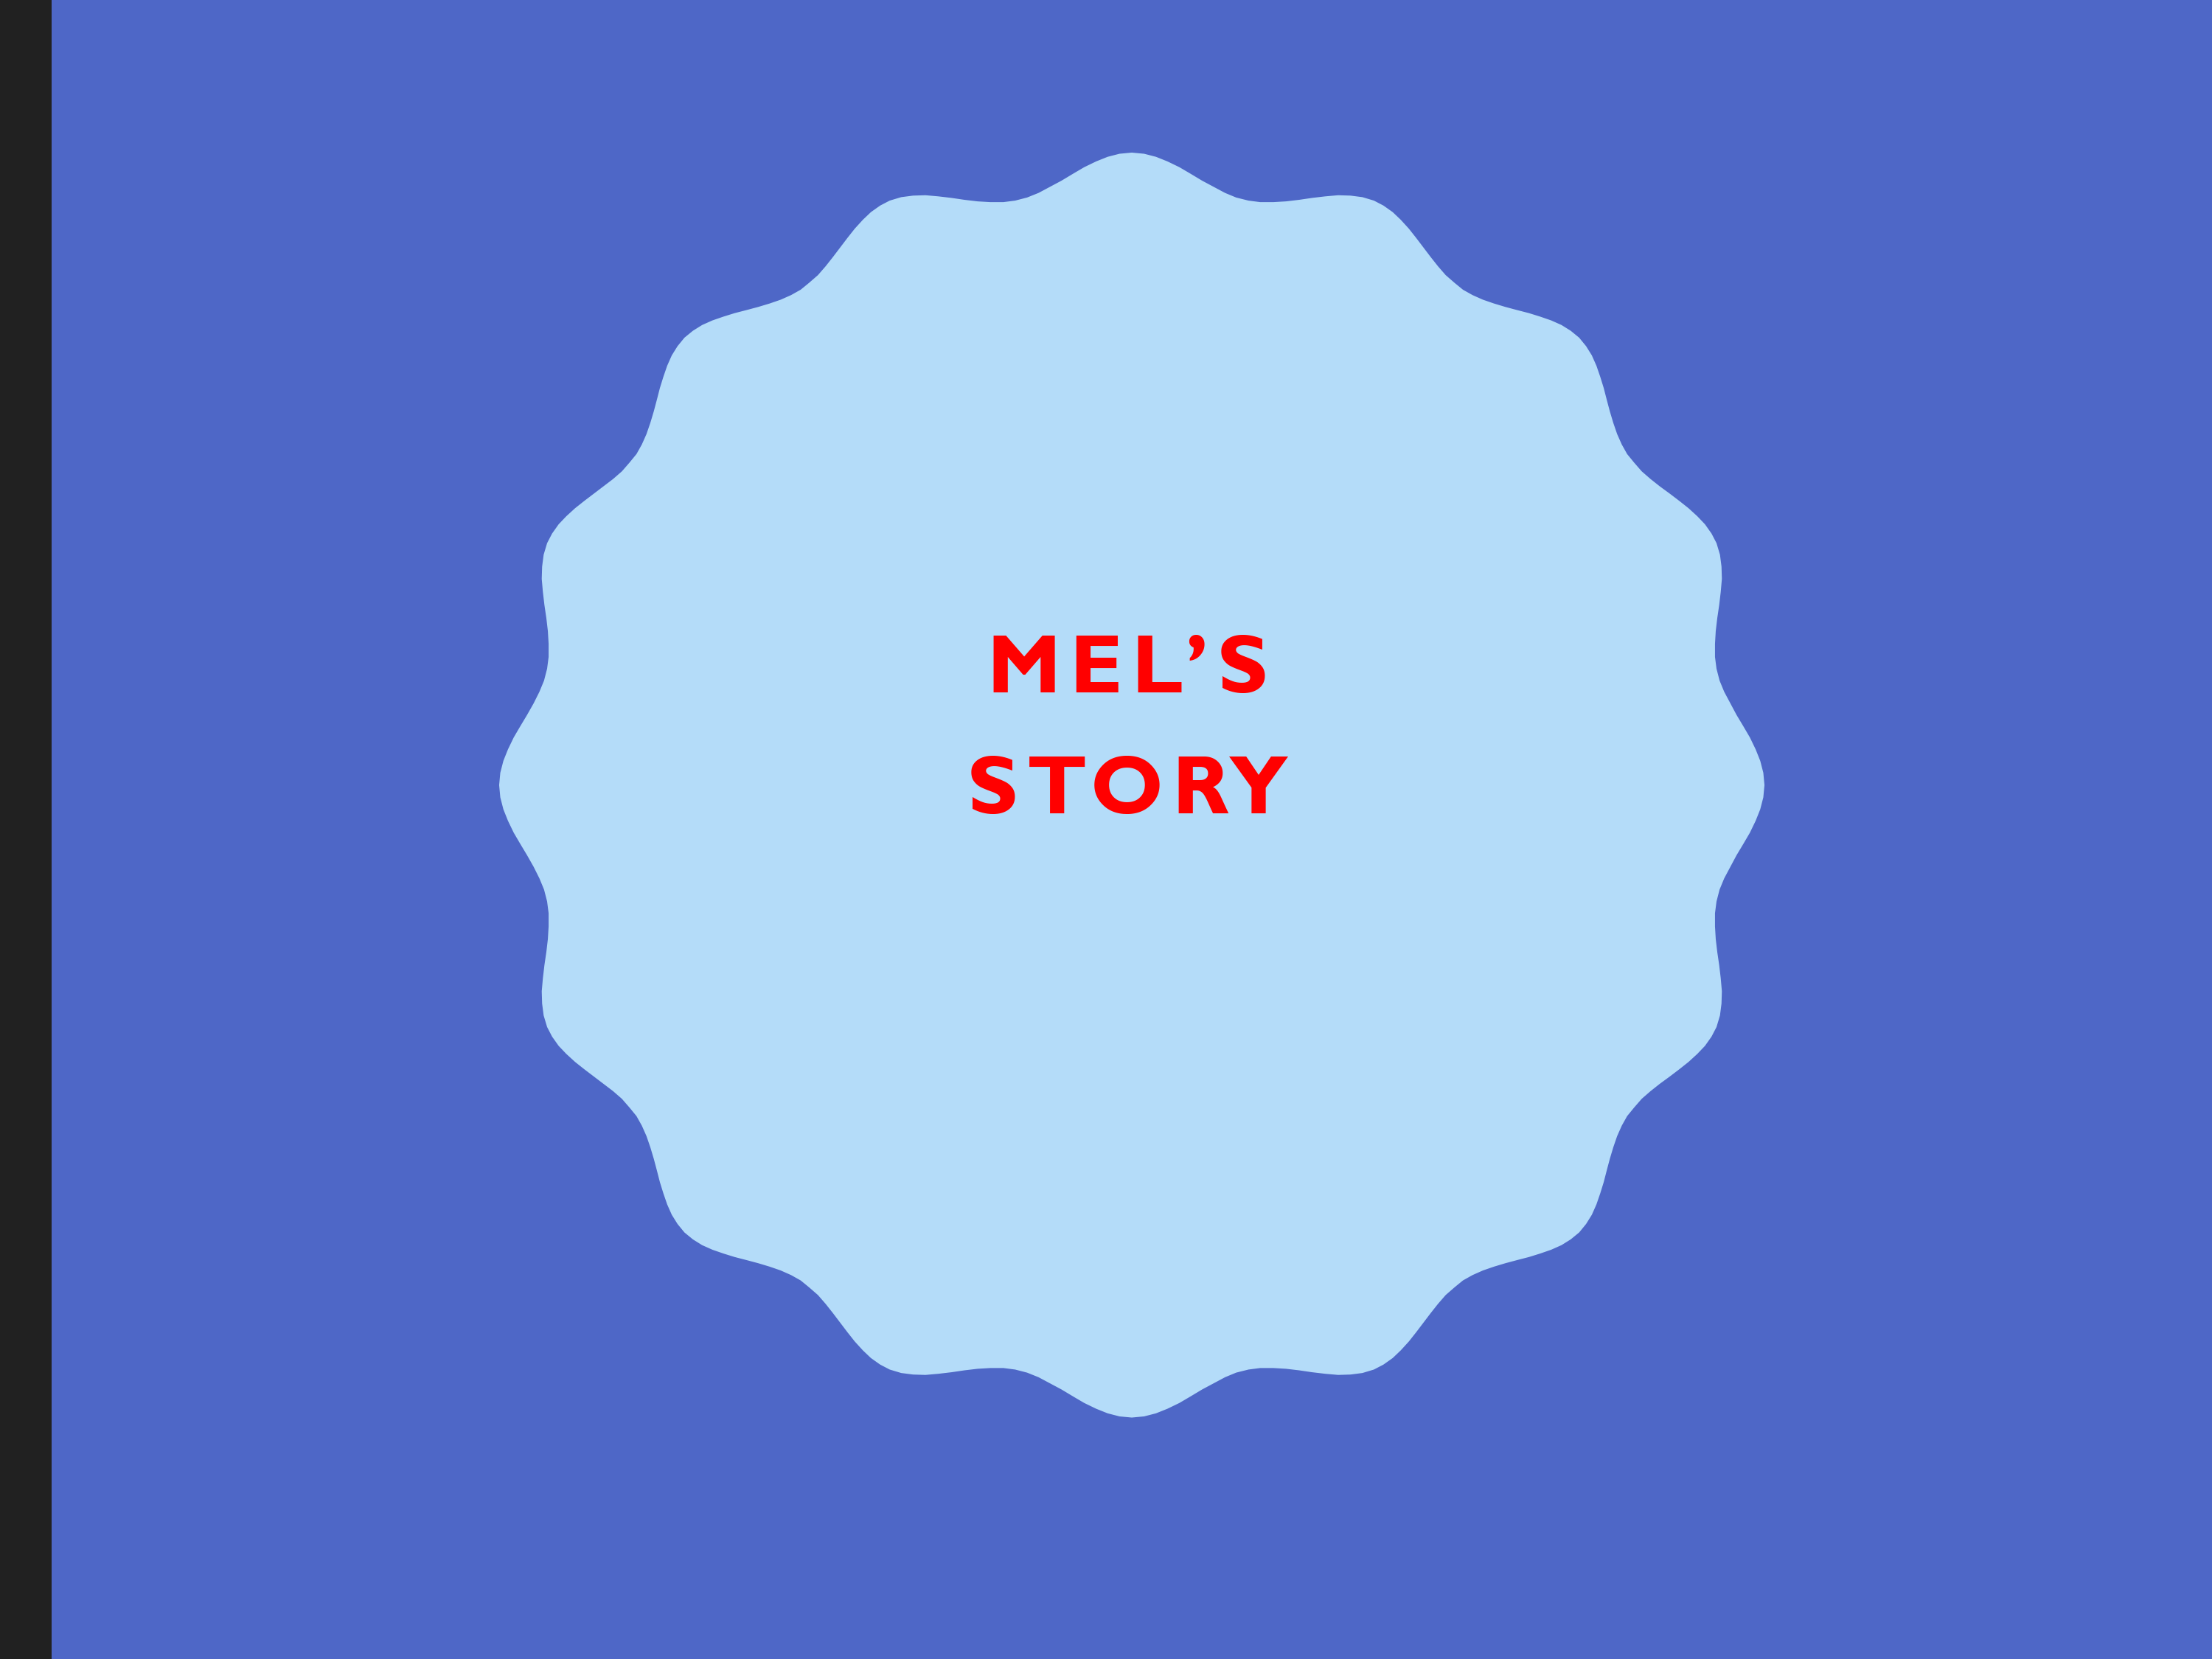 MEL'S STORY